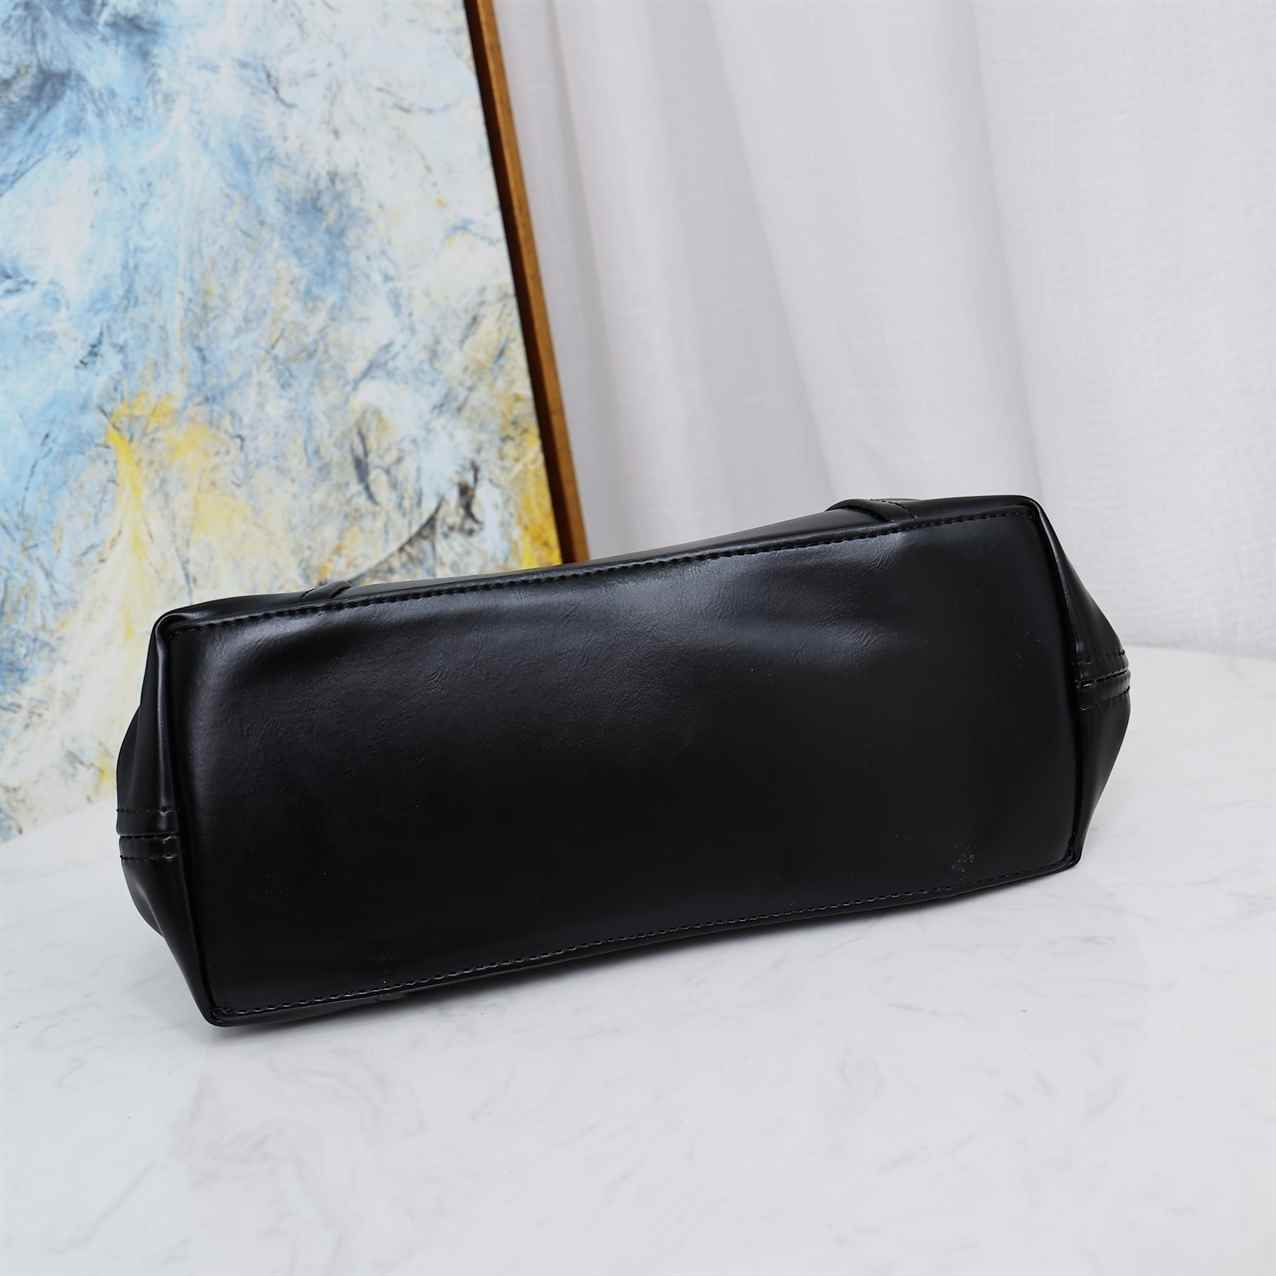 Balenciaga Editor Small Embossed Leather Bag replica